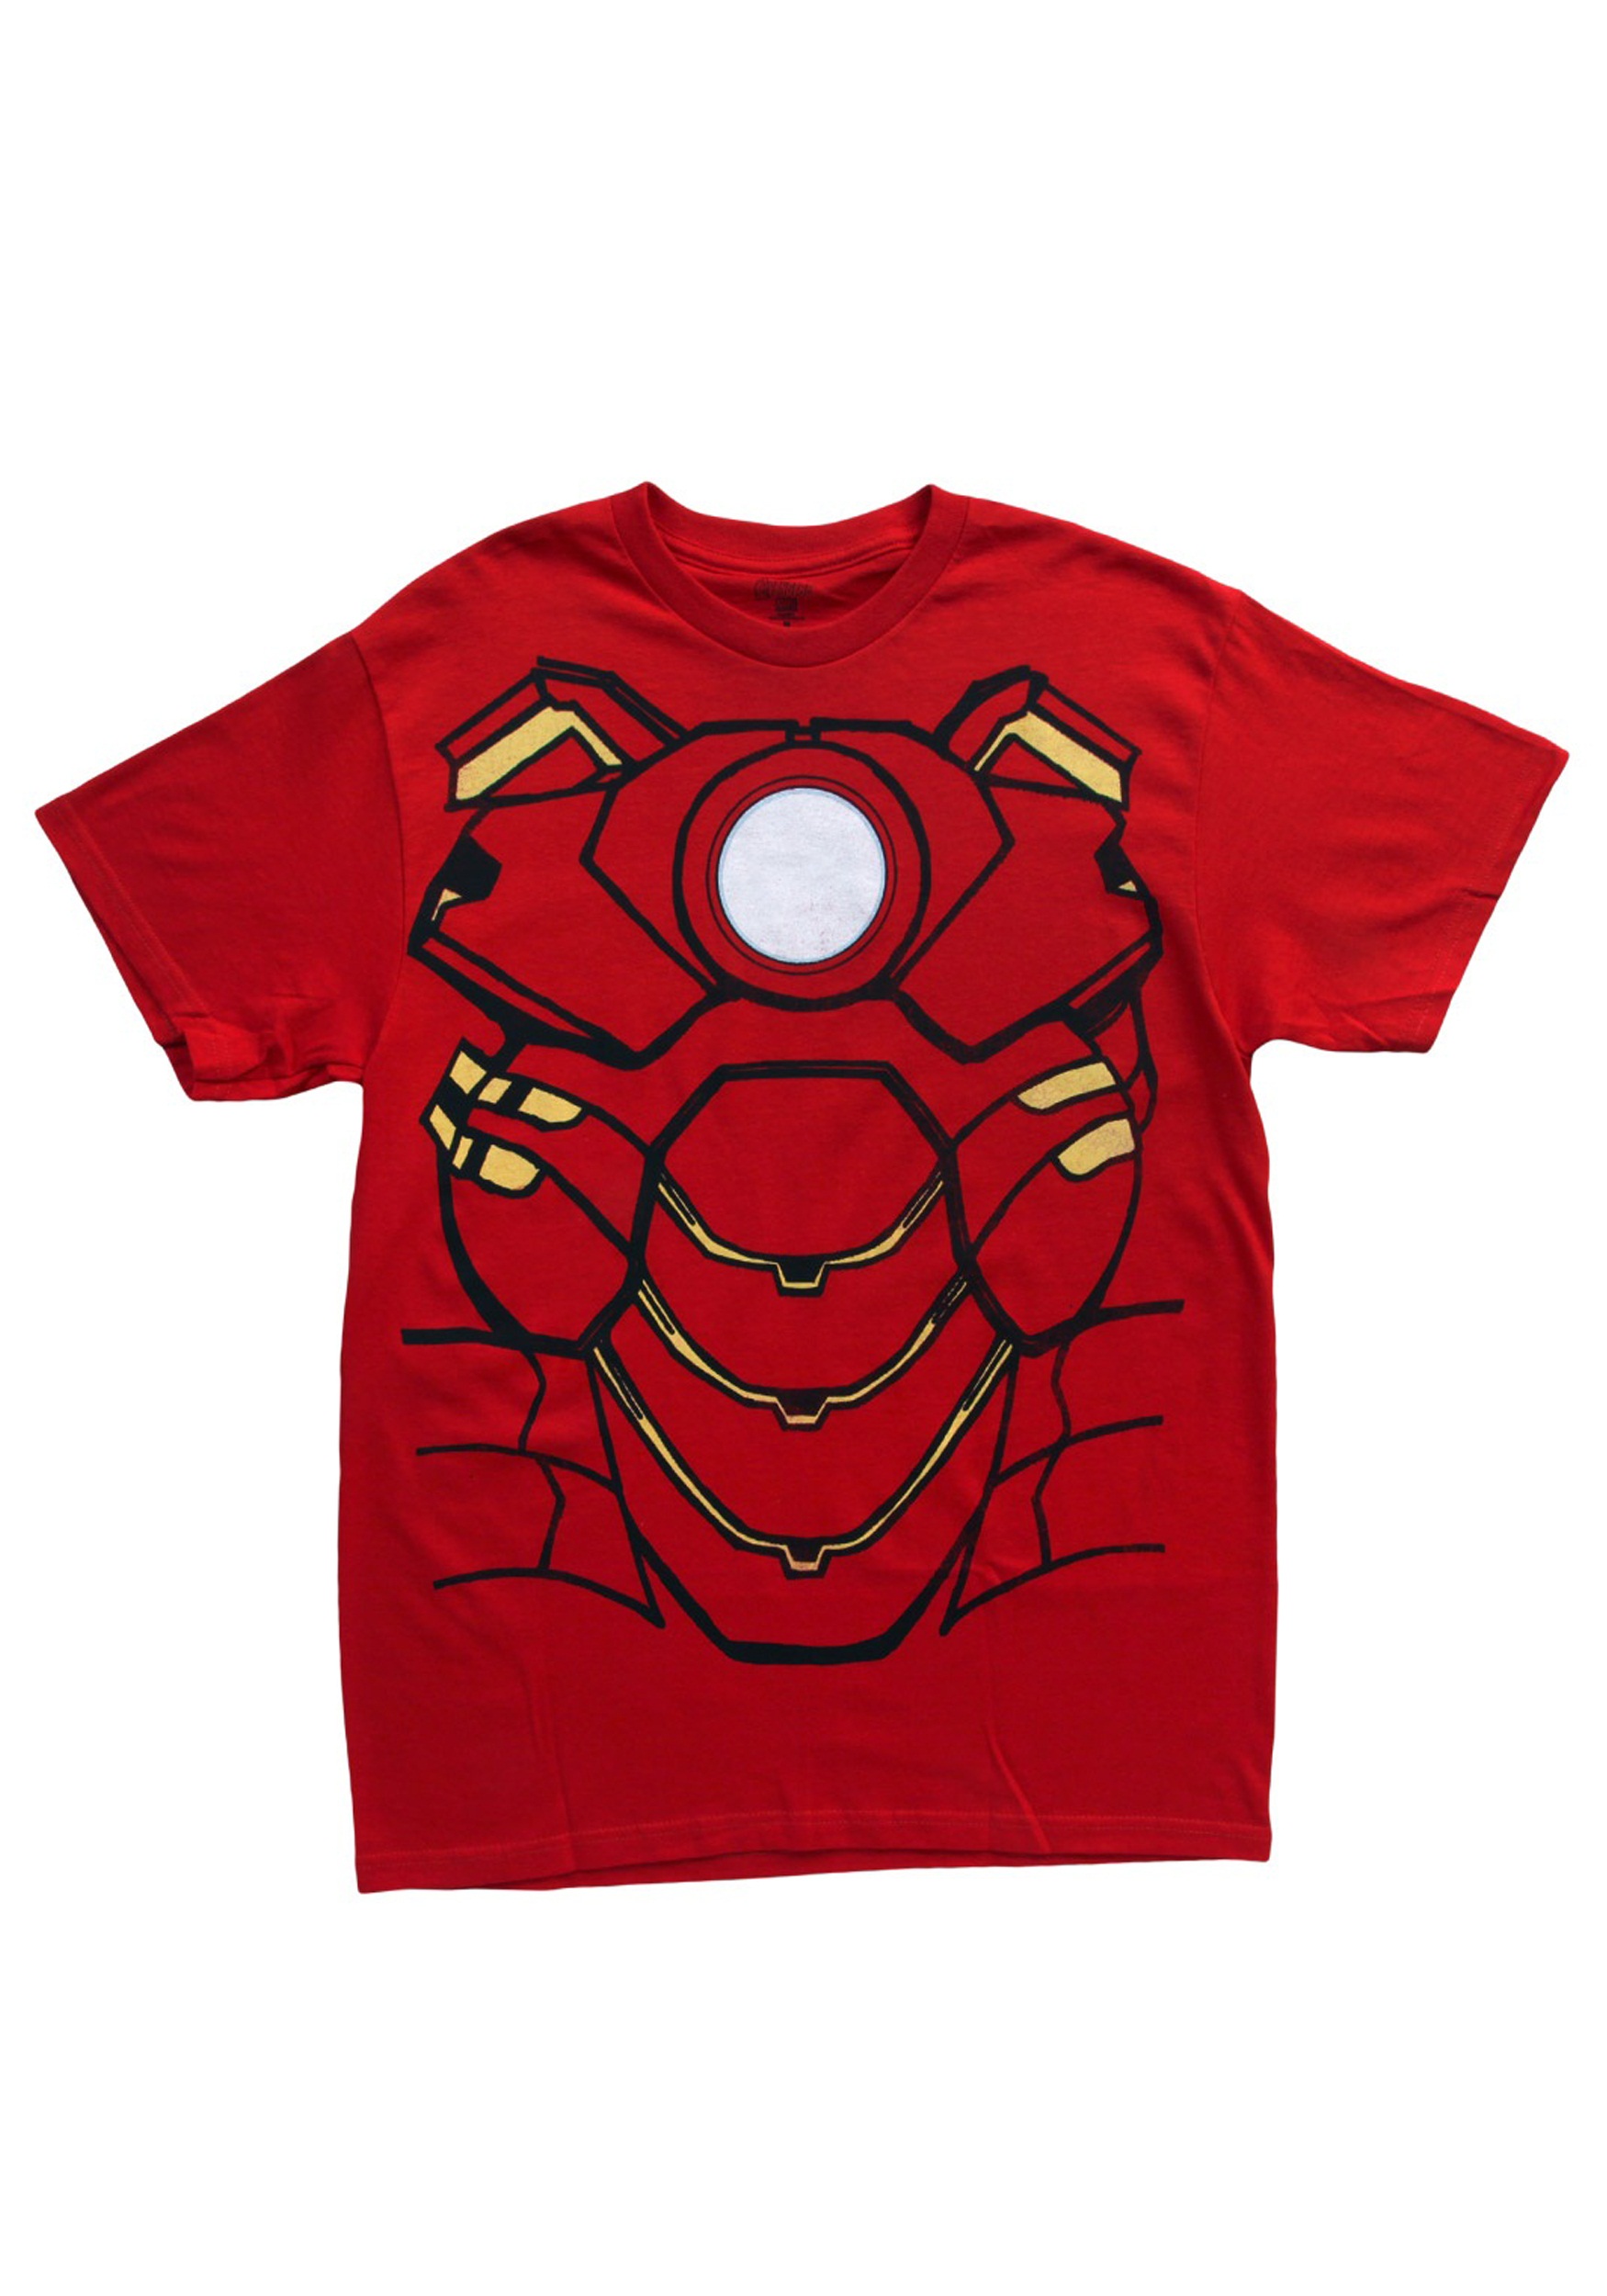 Adult Iron Man Costume T Shirt   Halloween Costume Ideas 20